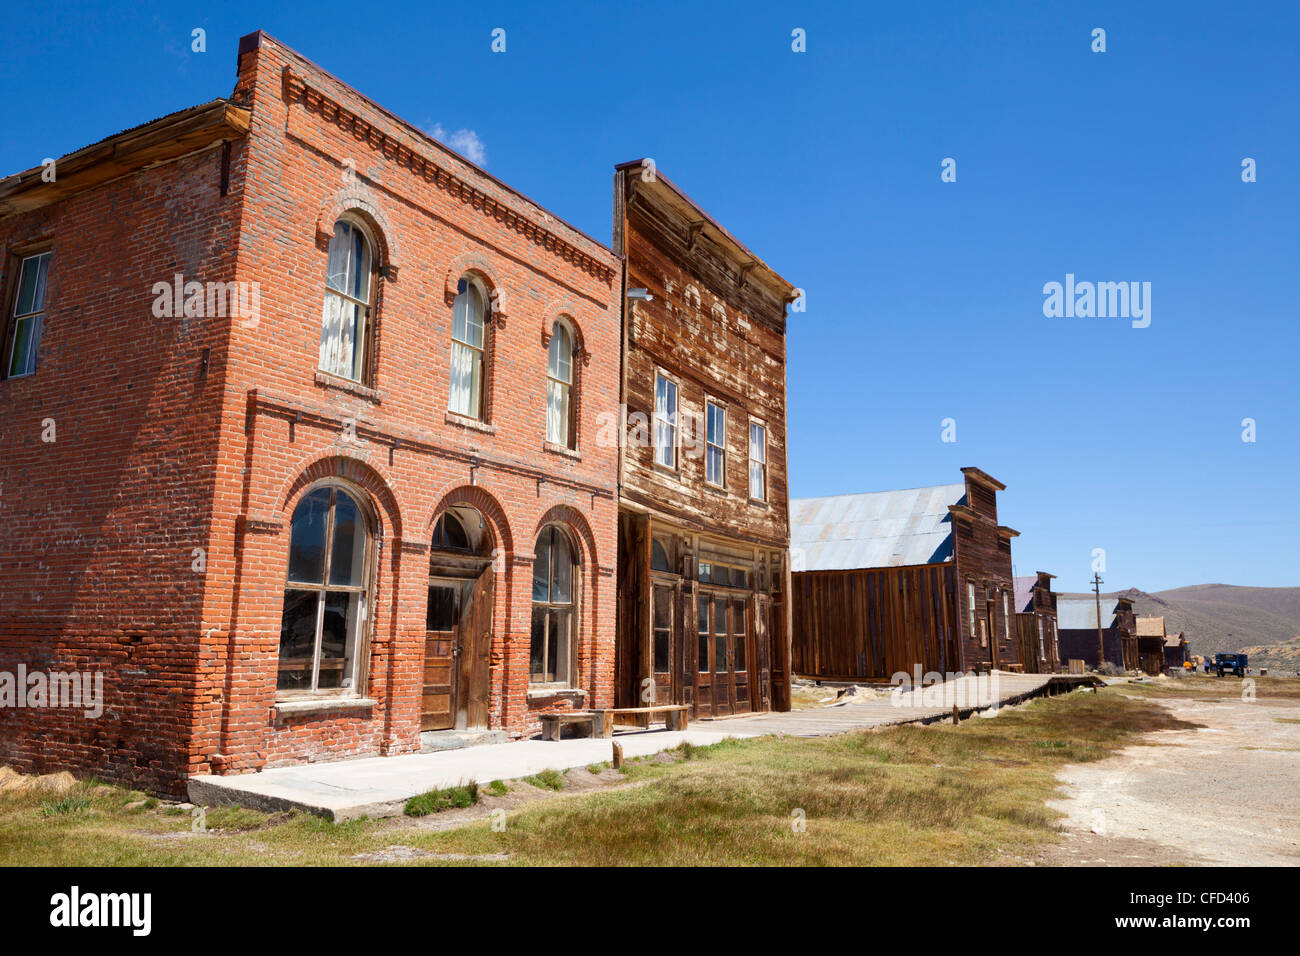 Brick Post Office and Dechambeau hotel, Bodie, Bodie State Historic Park, Bridgeport, California, USA Stock Photo